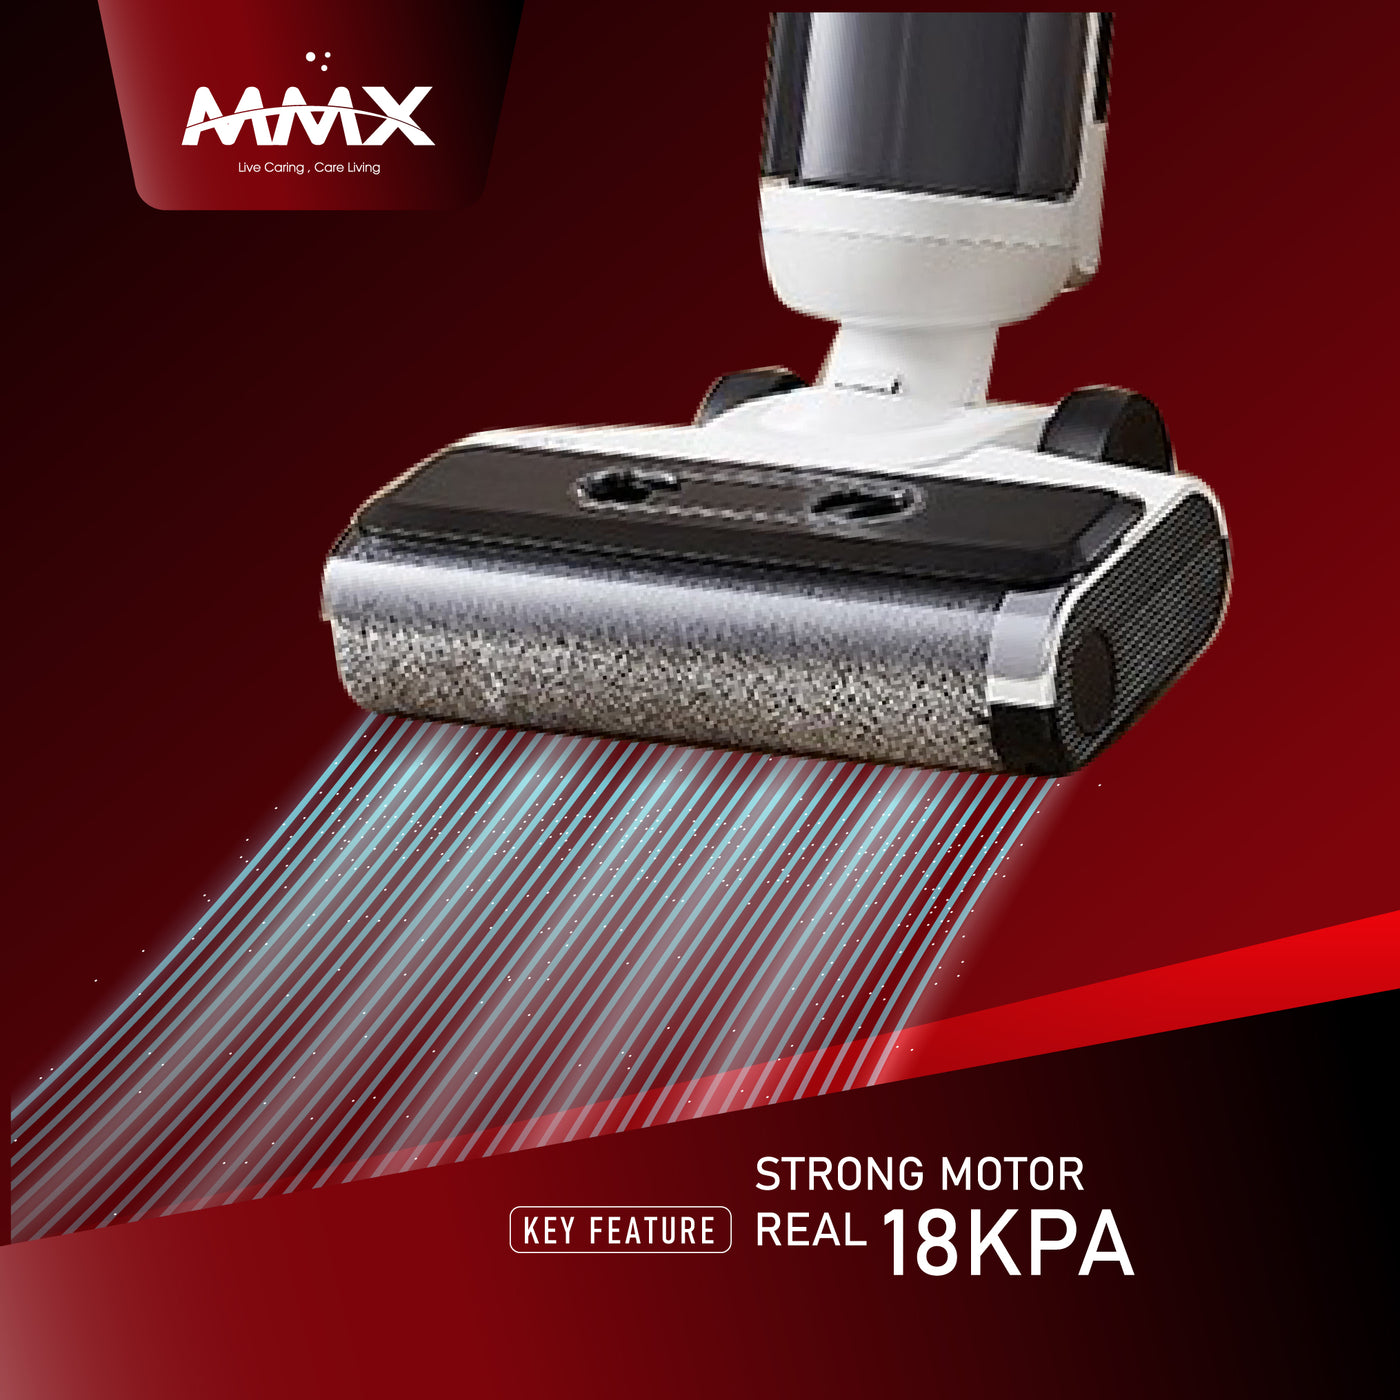 Aero Max iPro S878+ Smart Wet & Dry IPX4 Cordless Floor Washer – MMXMALL